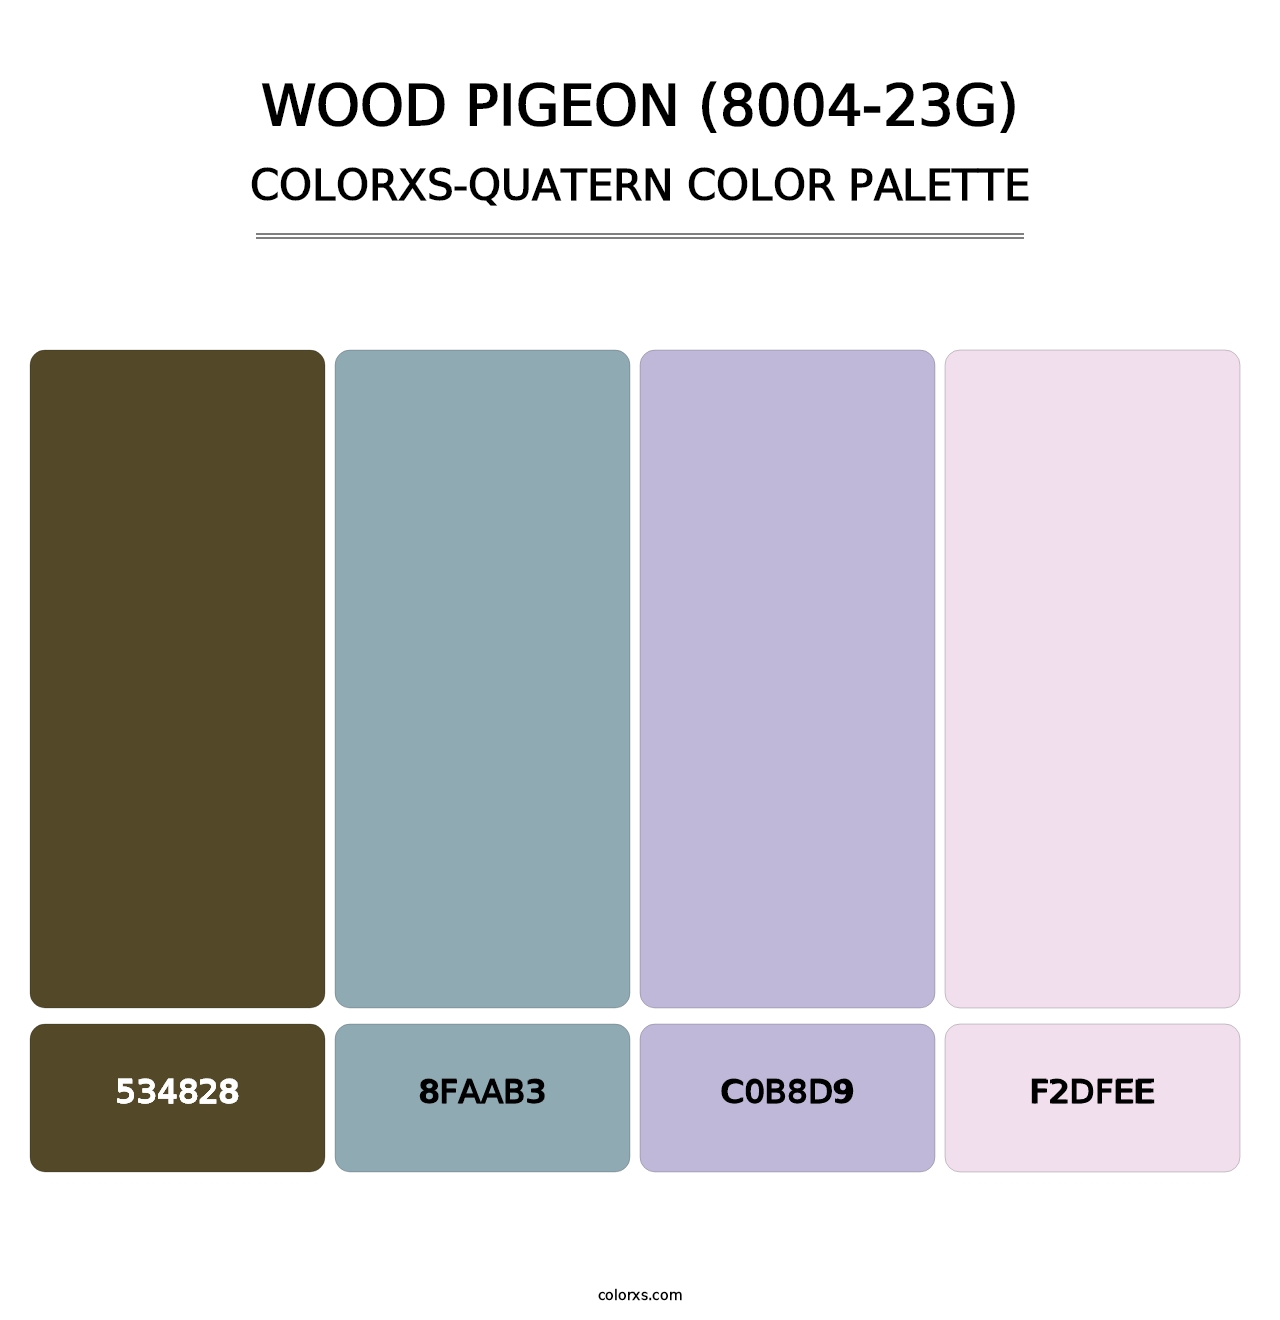 Wood Pigeon (8004-23G) - Colorxs Quatern Palette